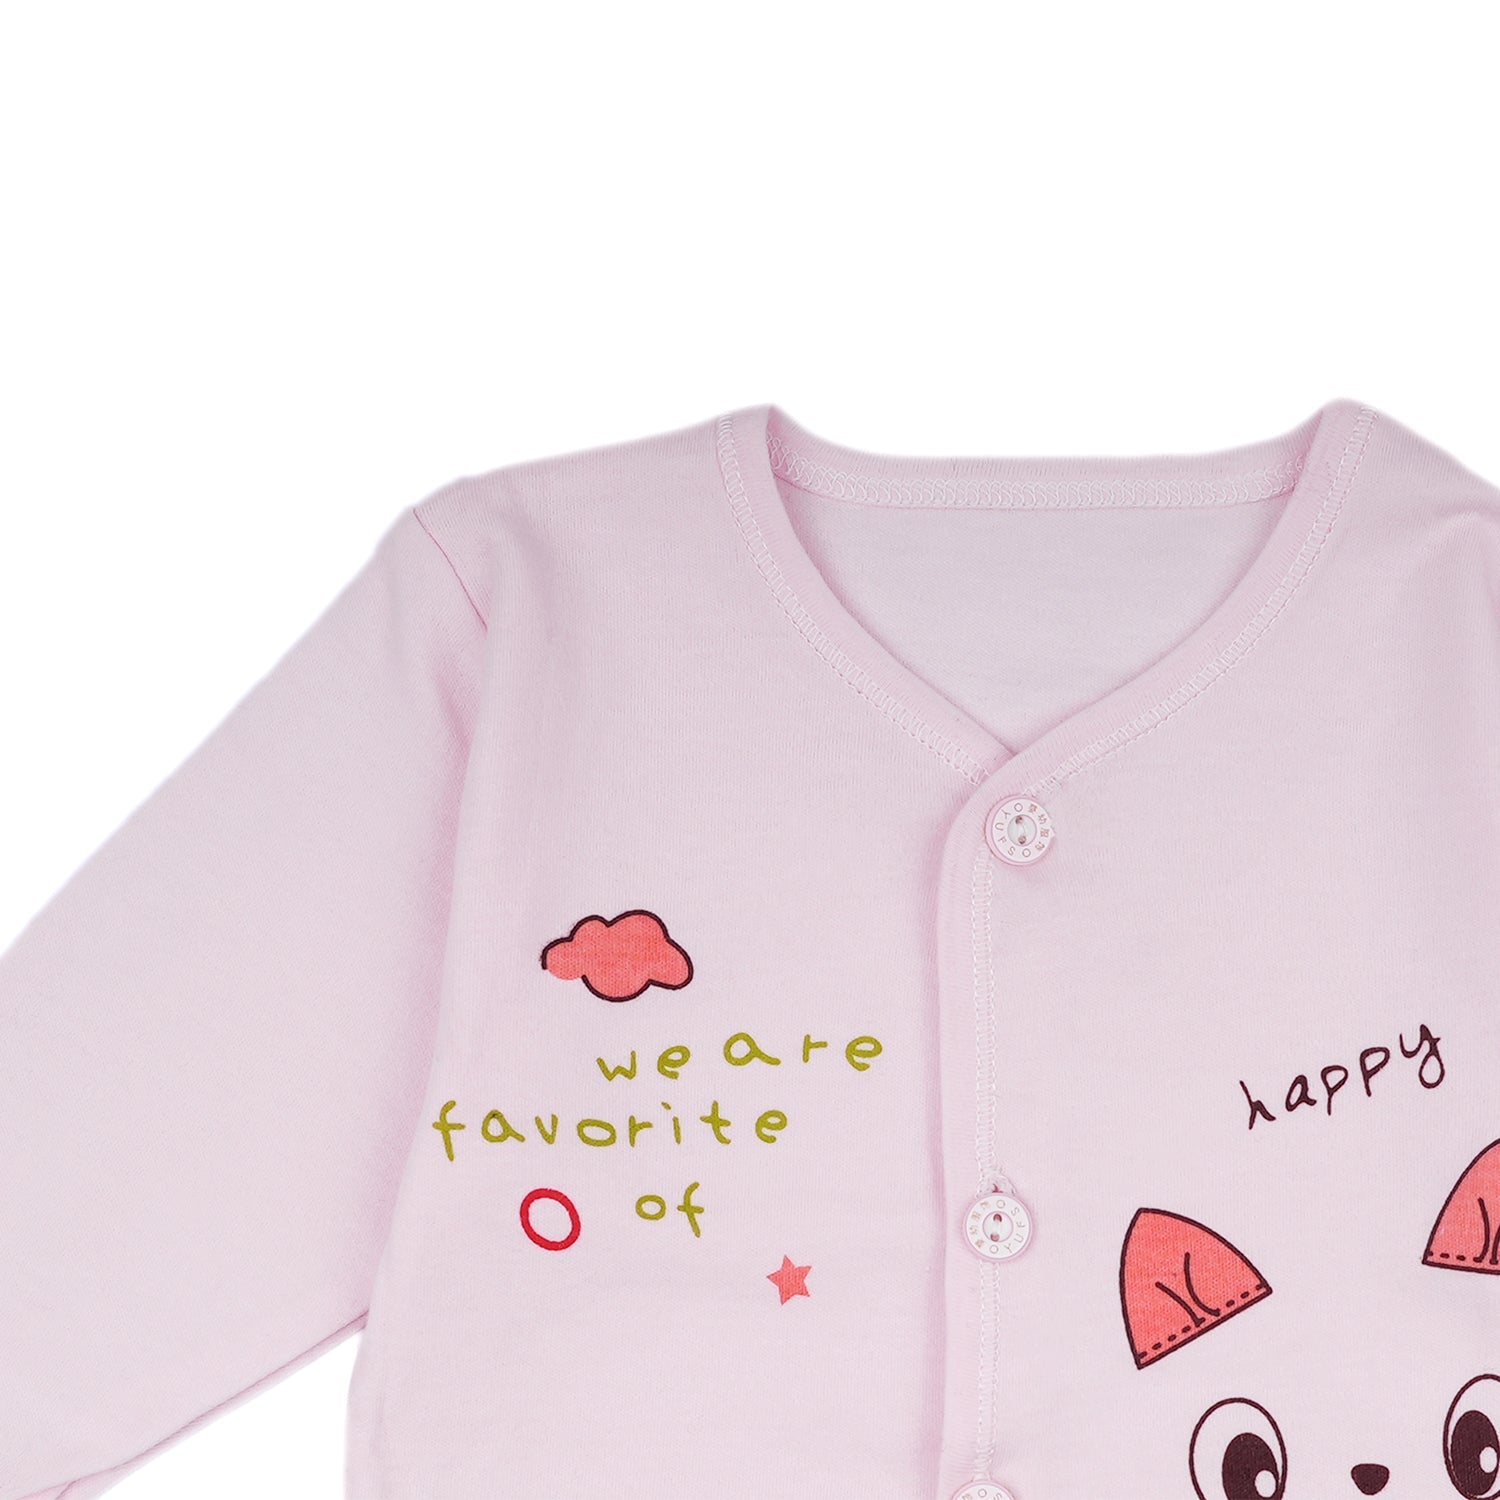 Baby Moo Happy Kitty Print Cap Bib Pyjamas 5 Pcs Clothing Gift Set - Pink